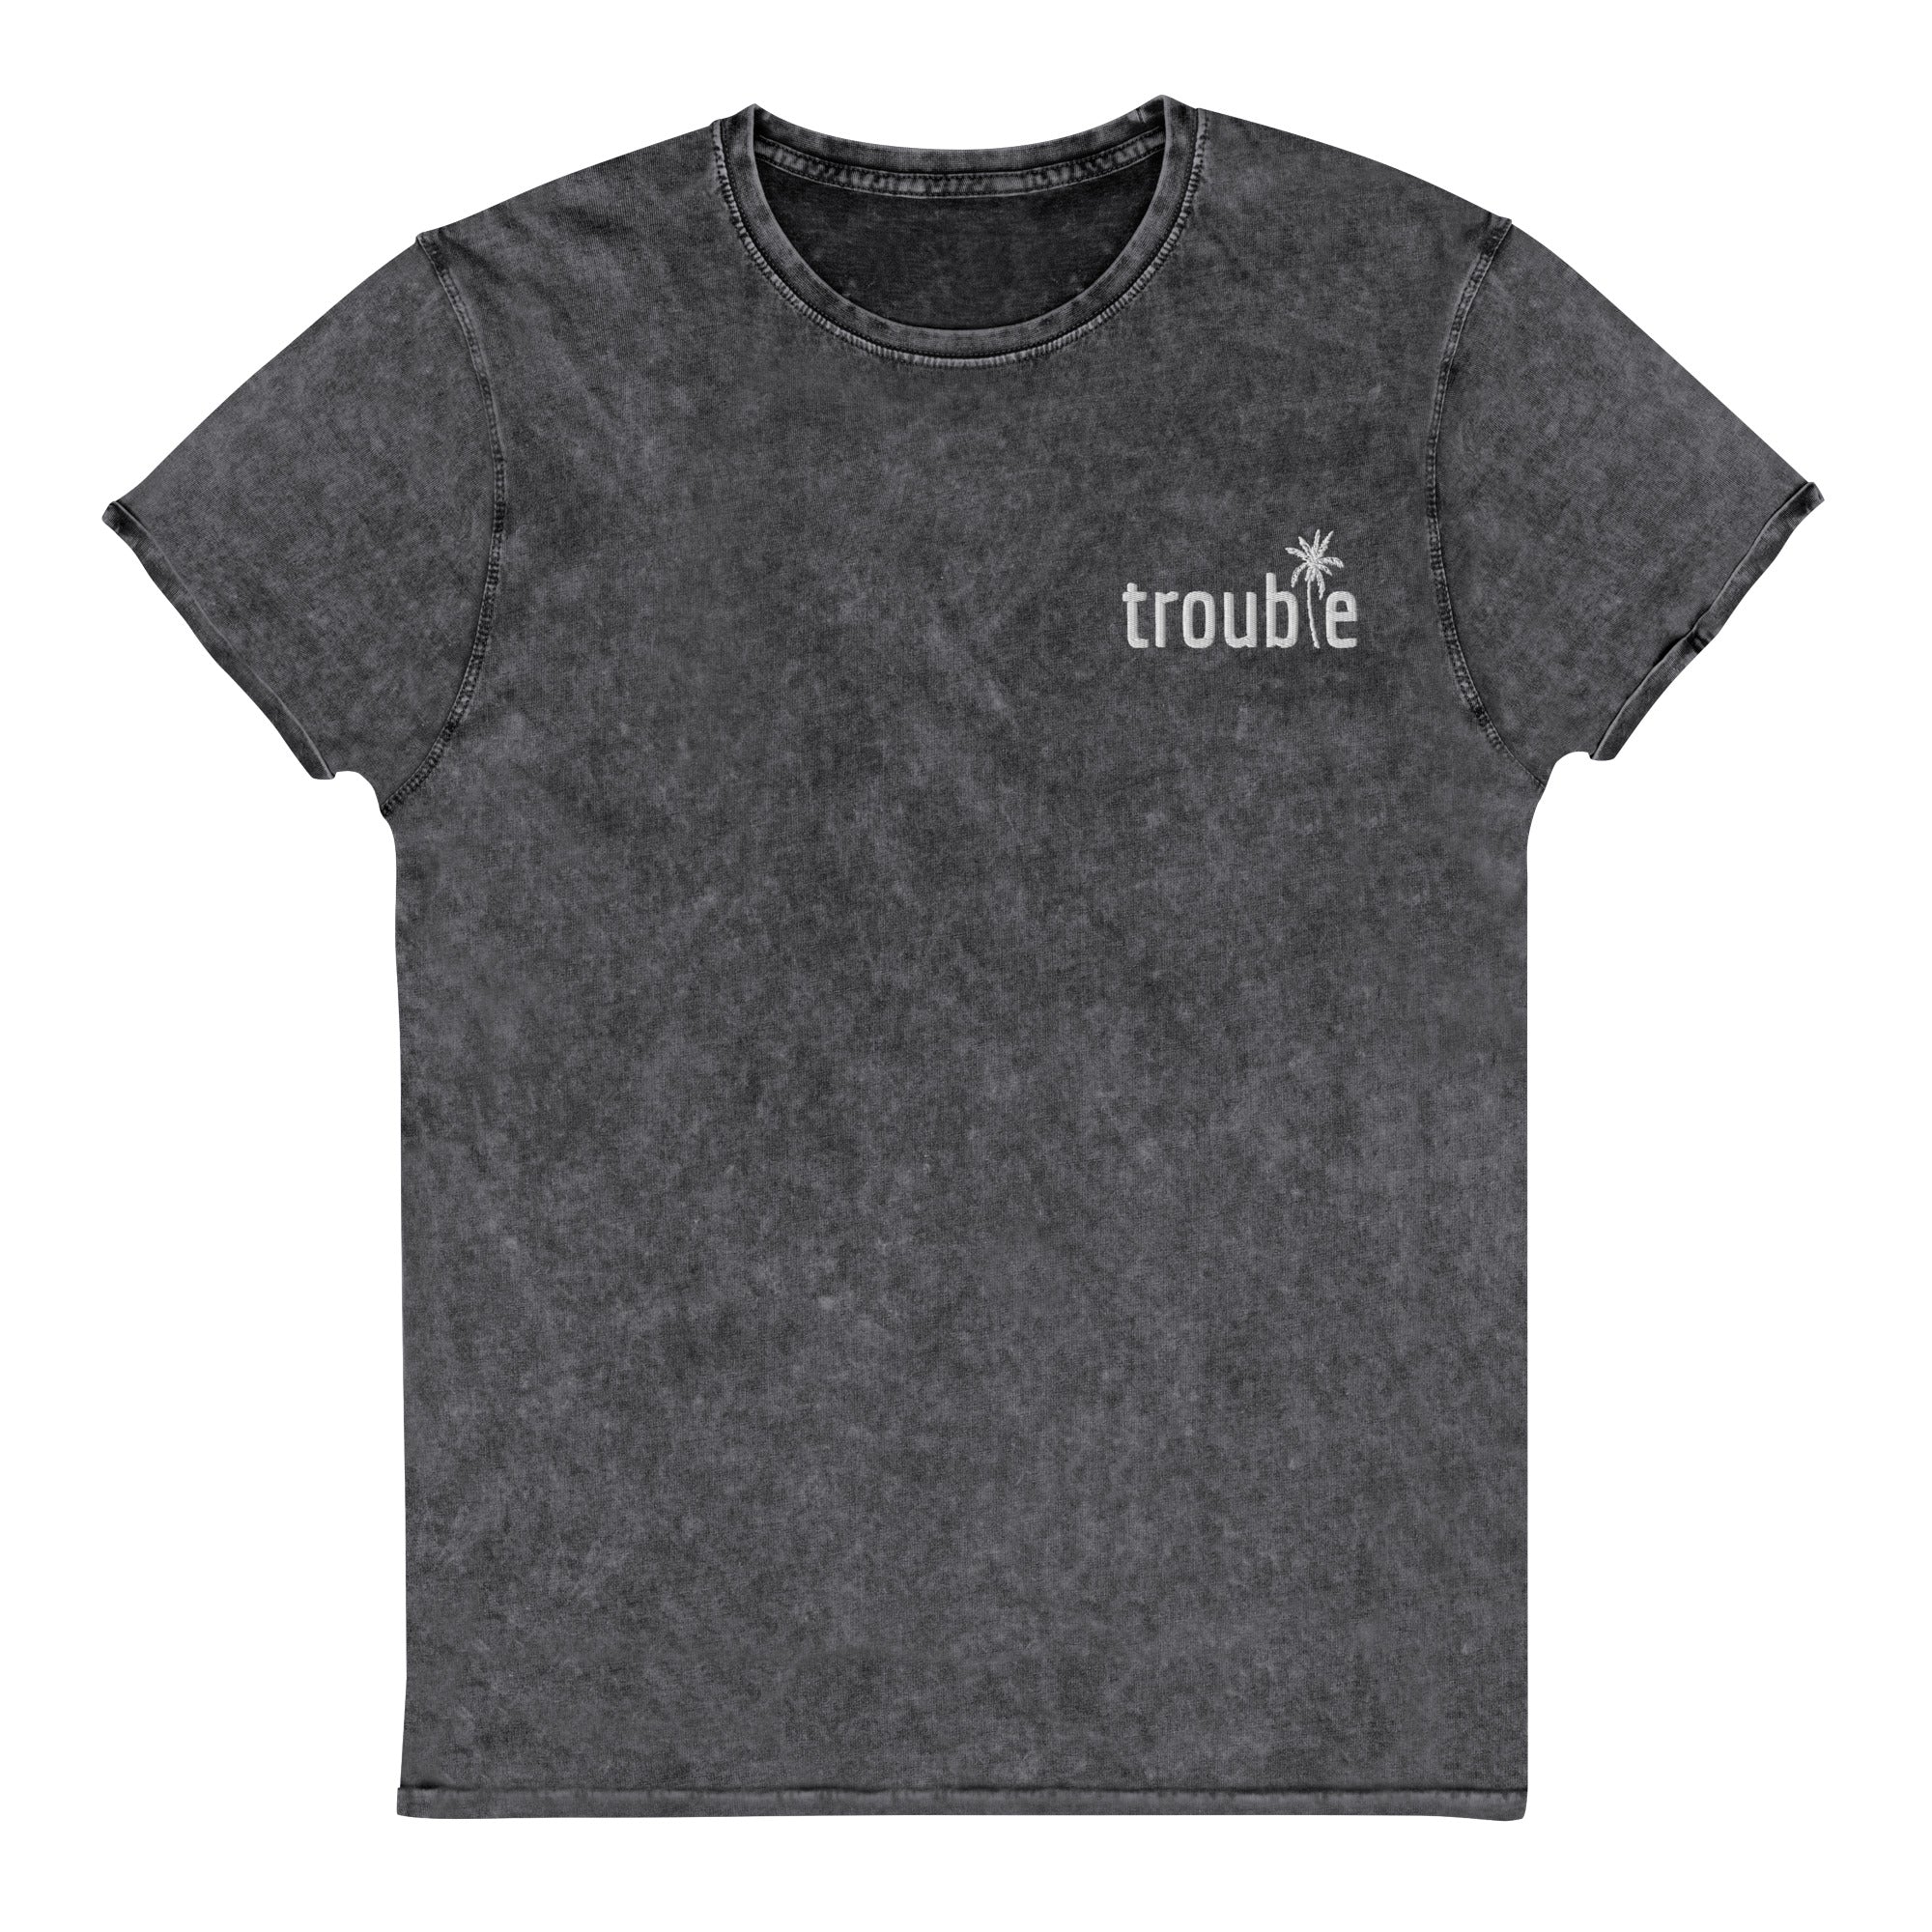 Trouble - Denim T-Shirt